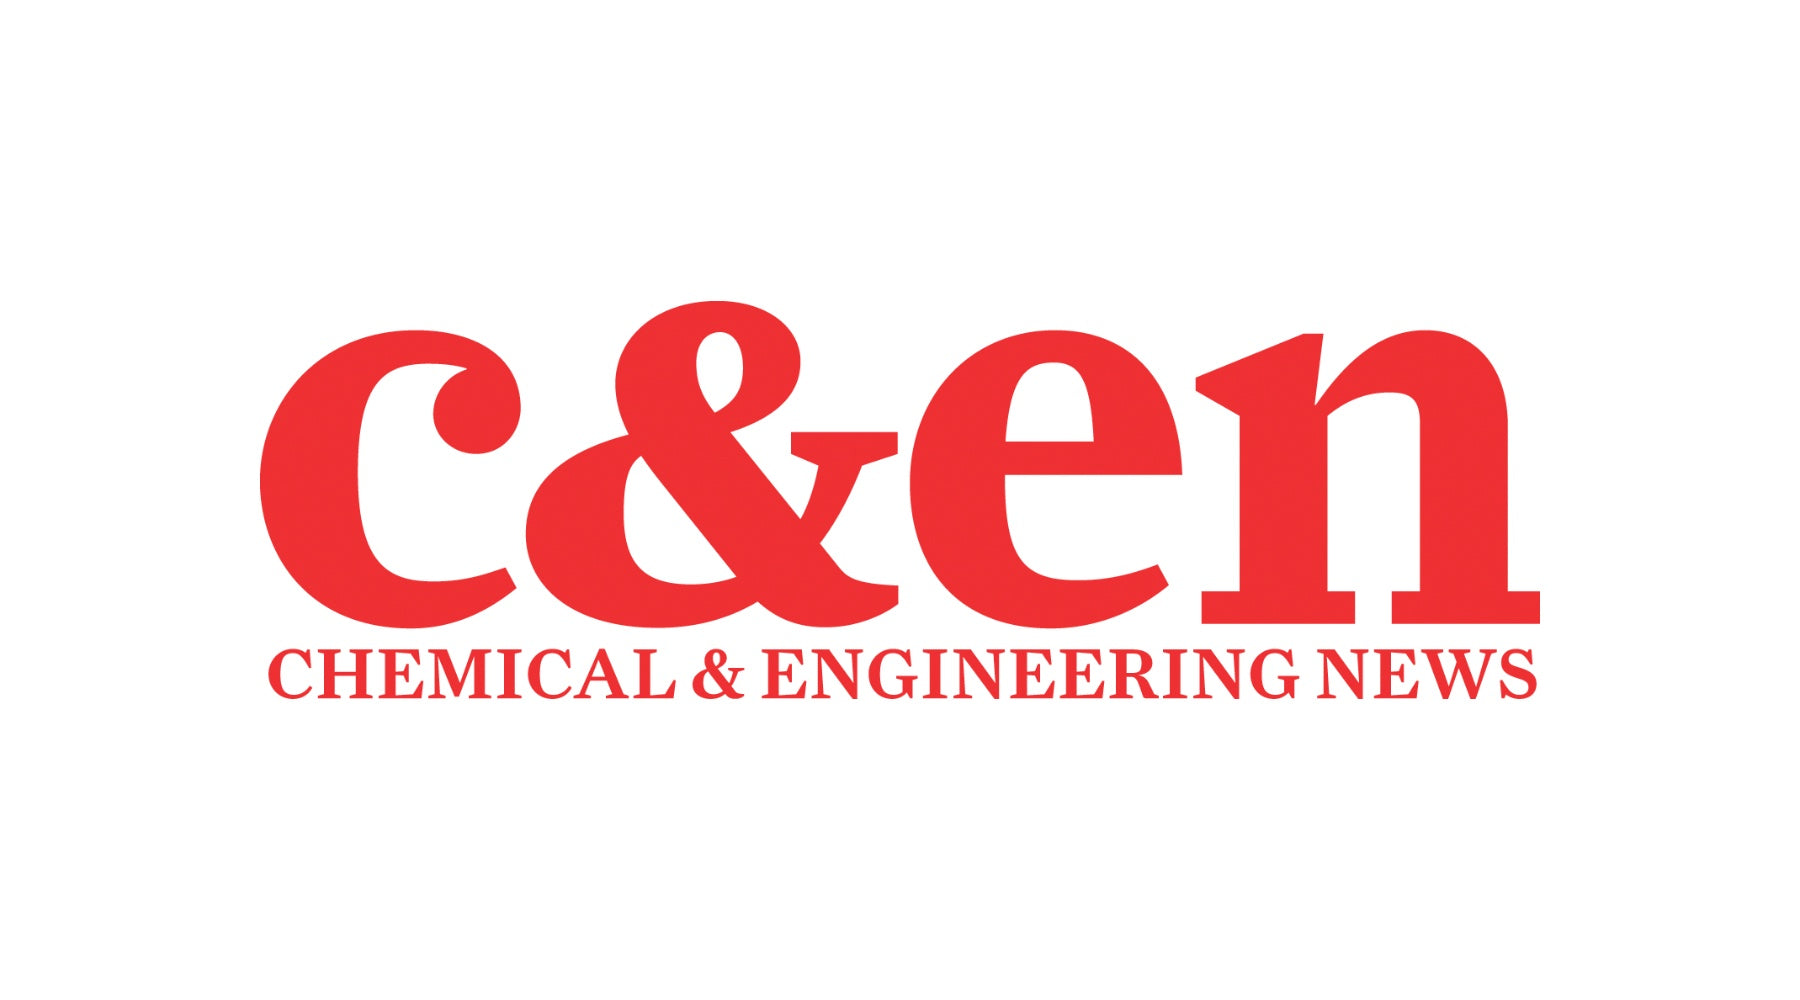 Chemical & Engineering News logo